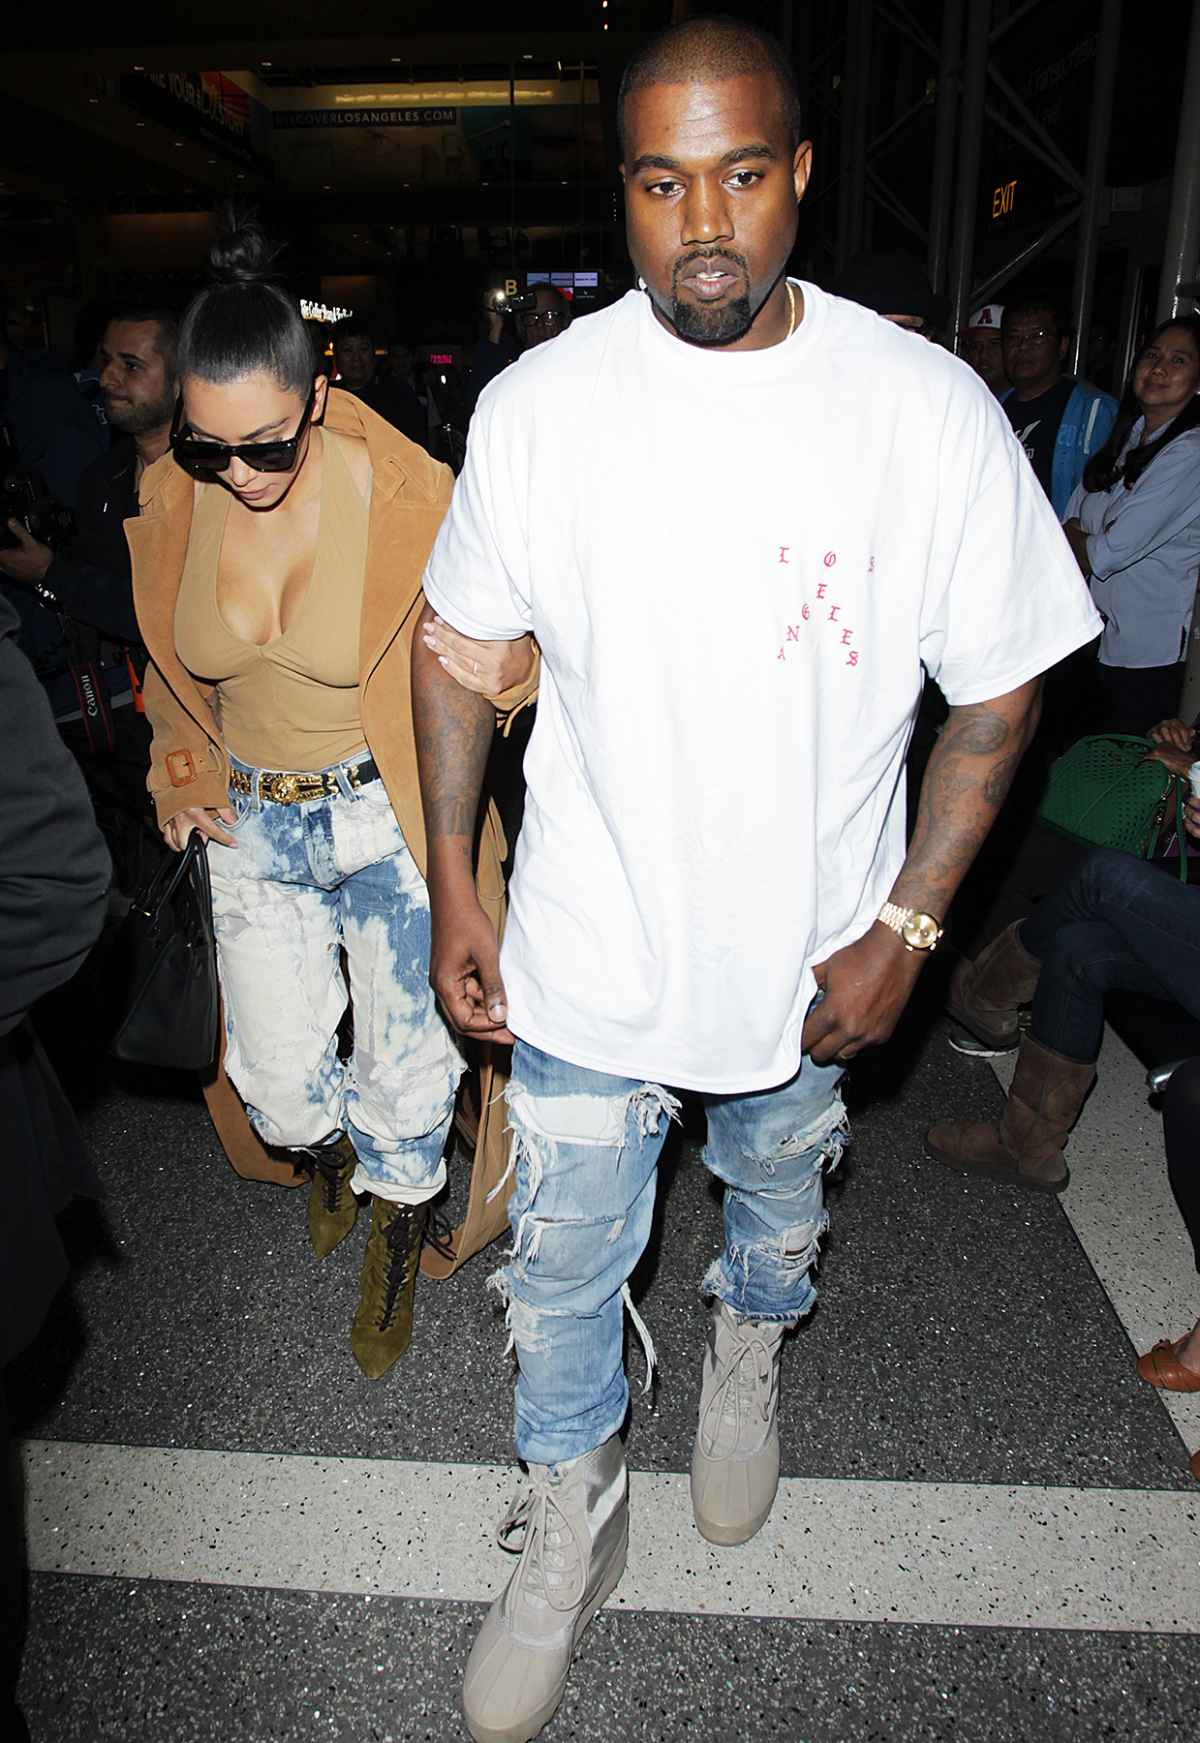 Kim and Kanye's Matching Sunglasses